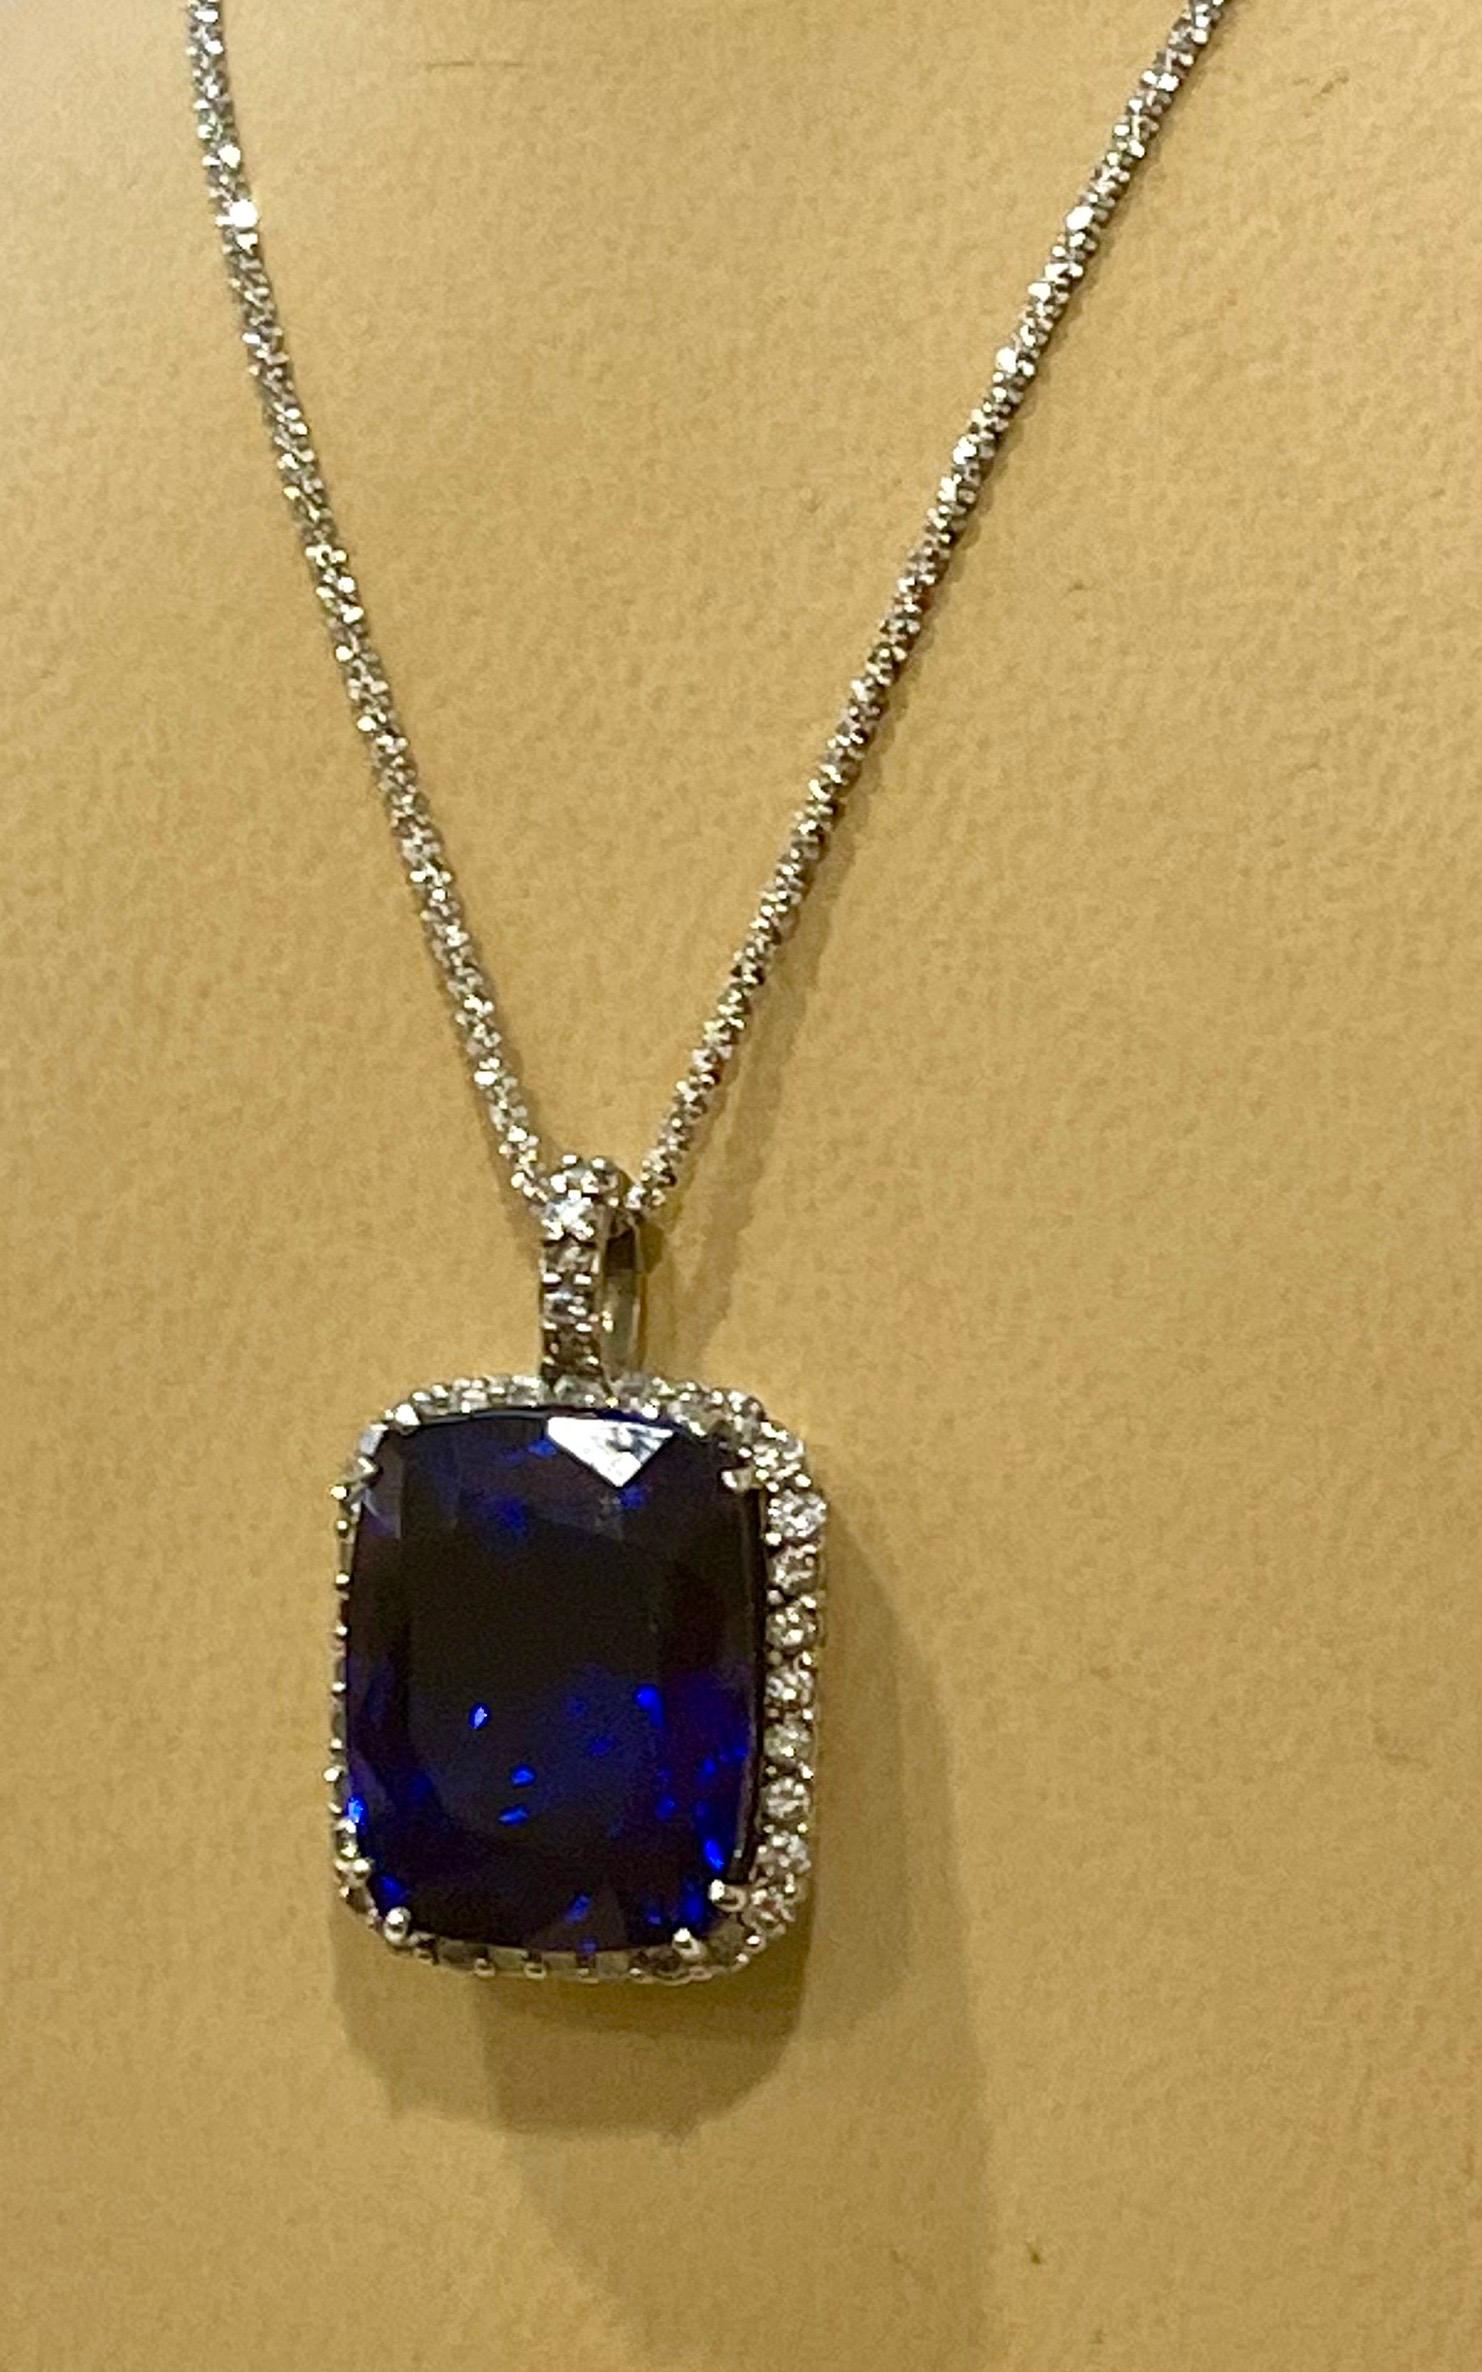 37.5 Carat Tanzanite Necklace & Diamond Pendant with Chain 14 Karat White Gold For Sale 2